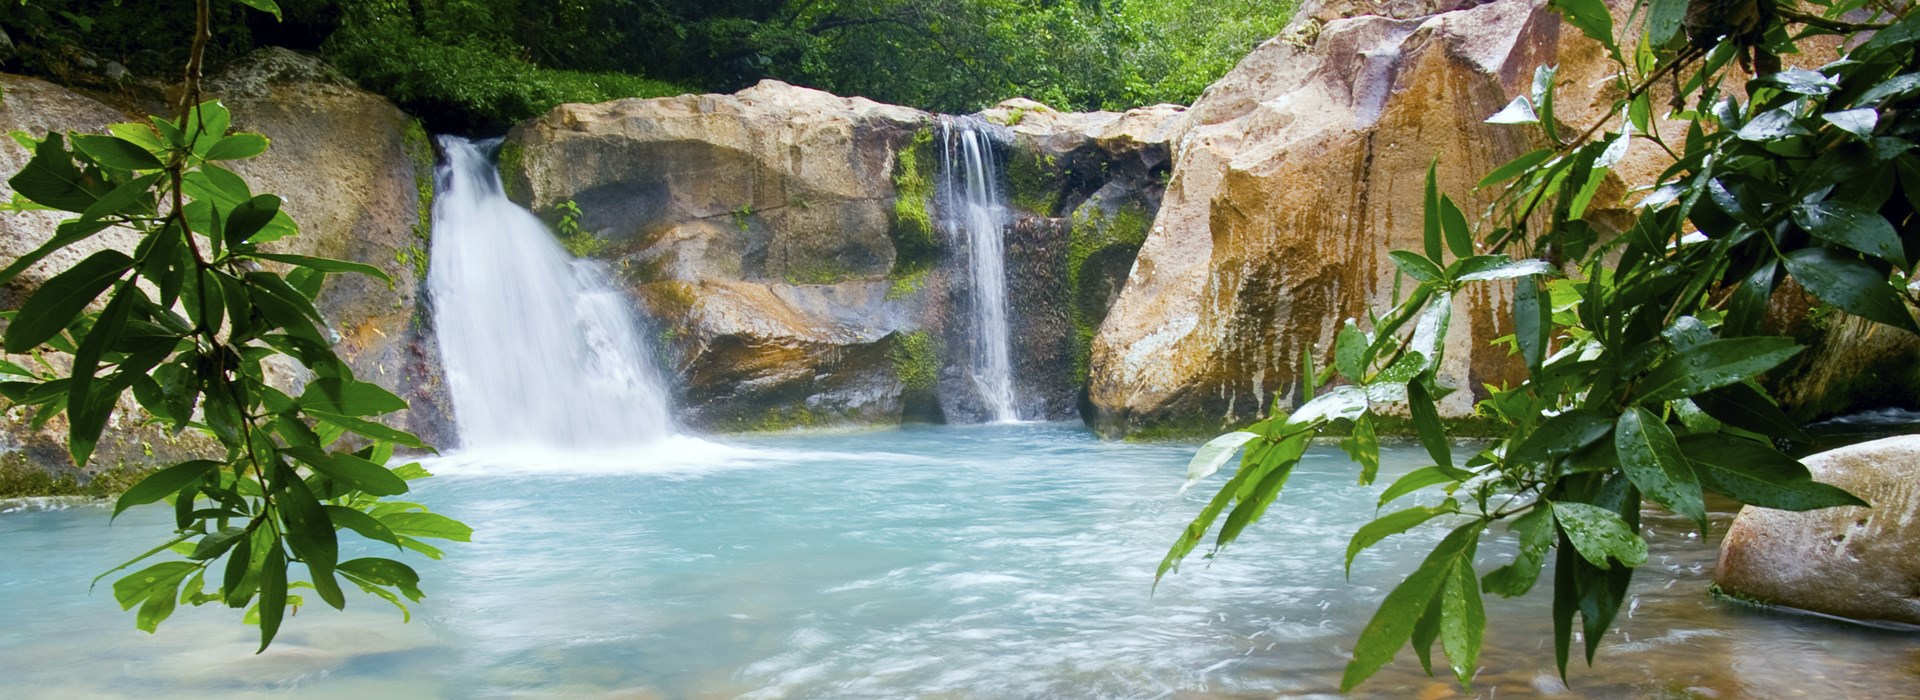 Visiter Le parc national Rincon de la Vieja - Costa Rica